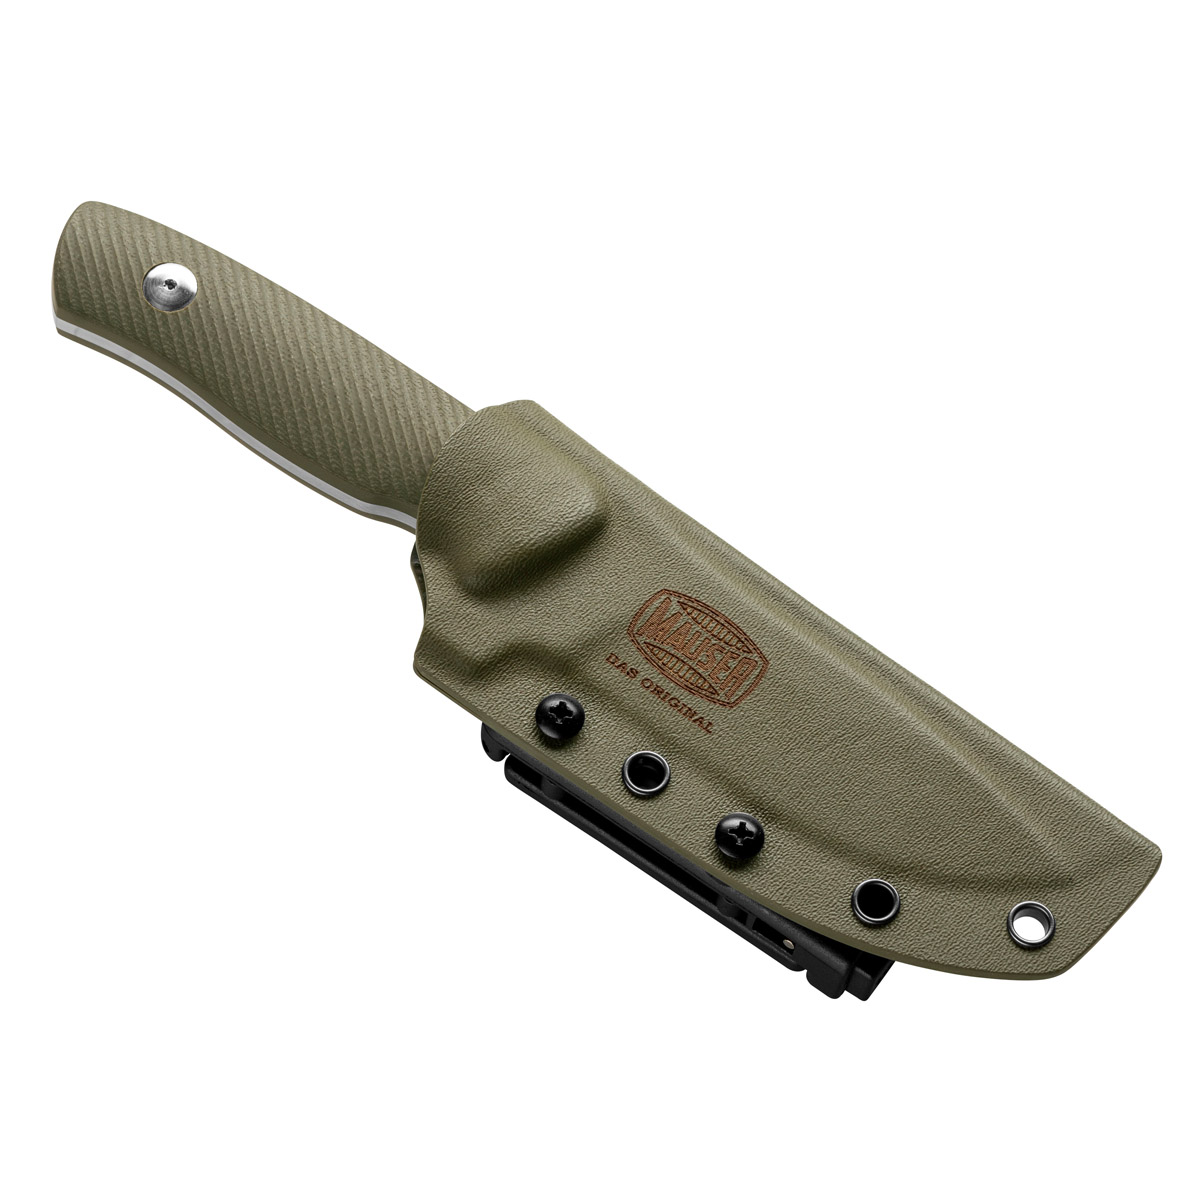 Mauser Messer  m. Kydex-Scheide  Full-Tang-Vollerl-Bauweise  14C28N Stahl Massive G10 Polymer-Griffschalen 